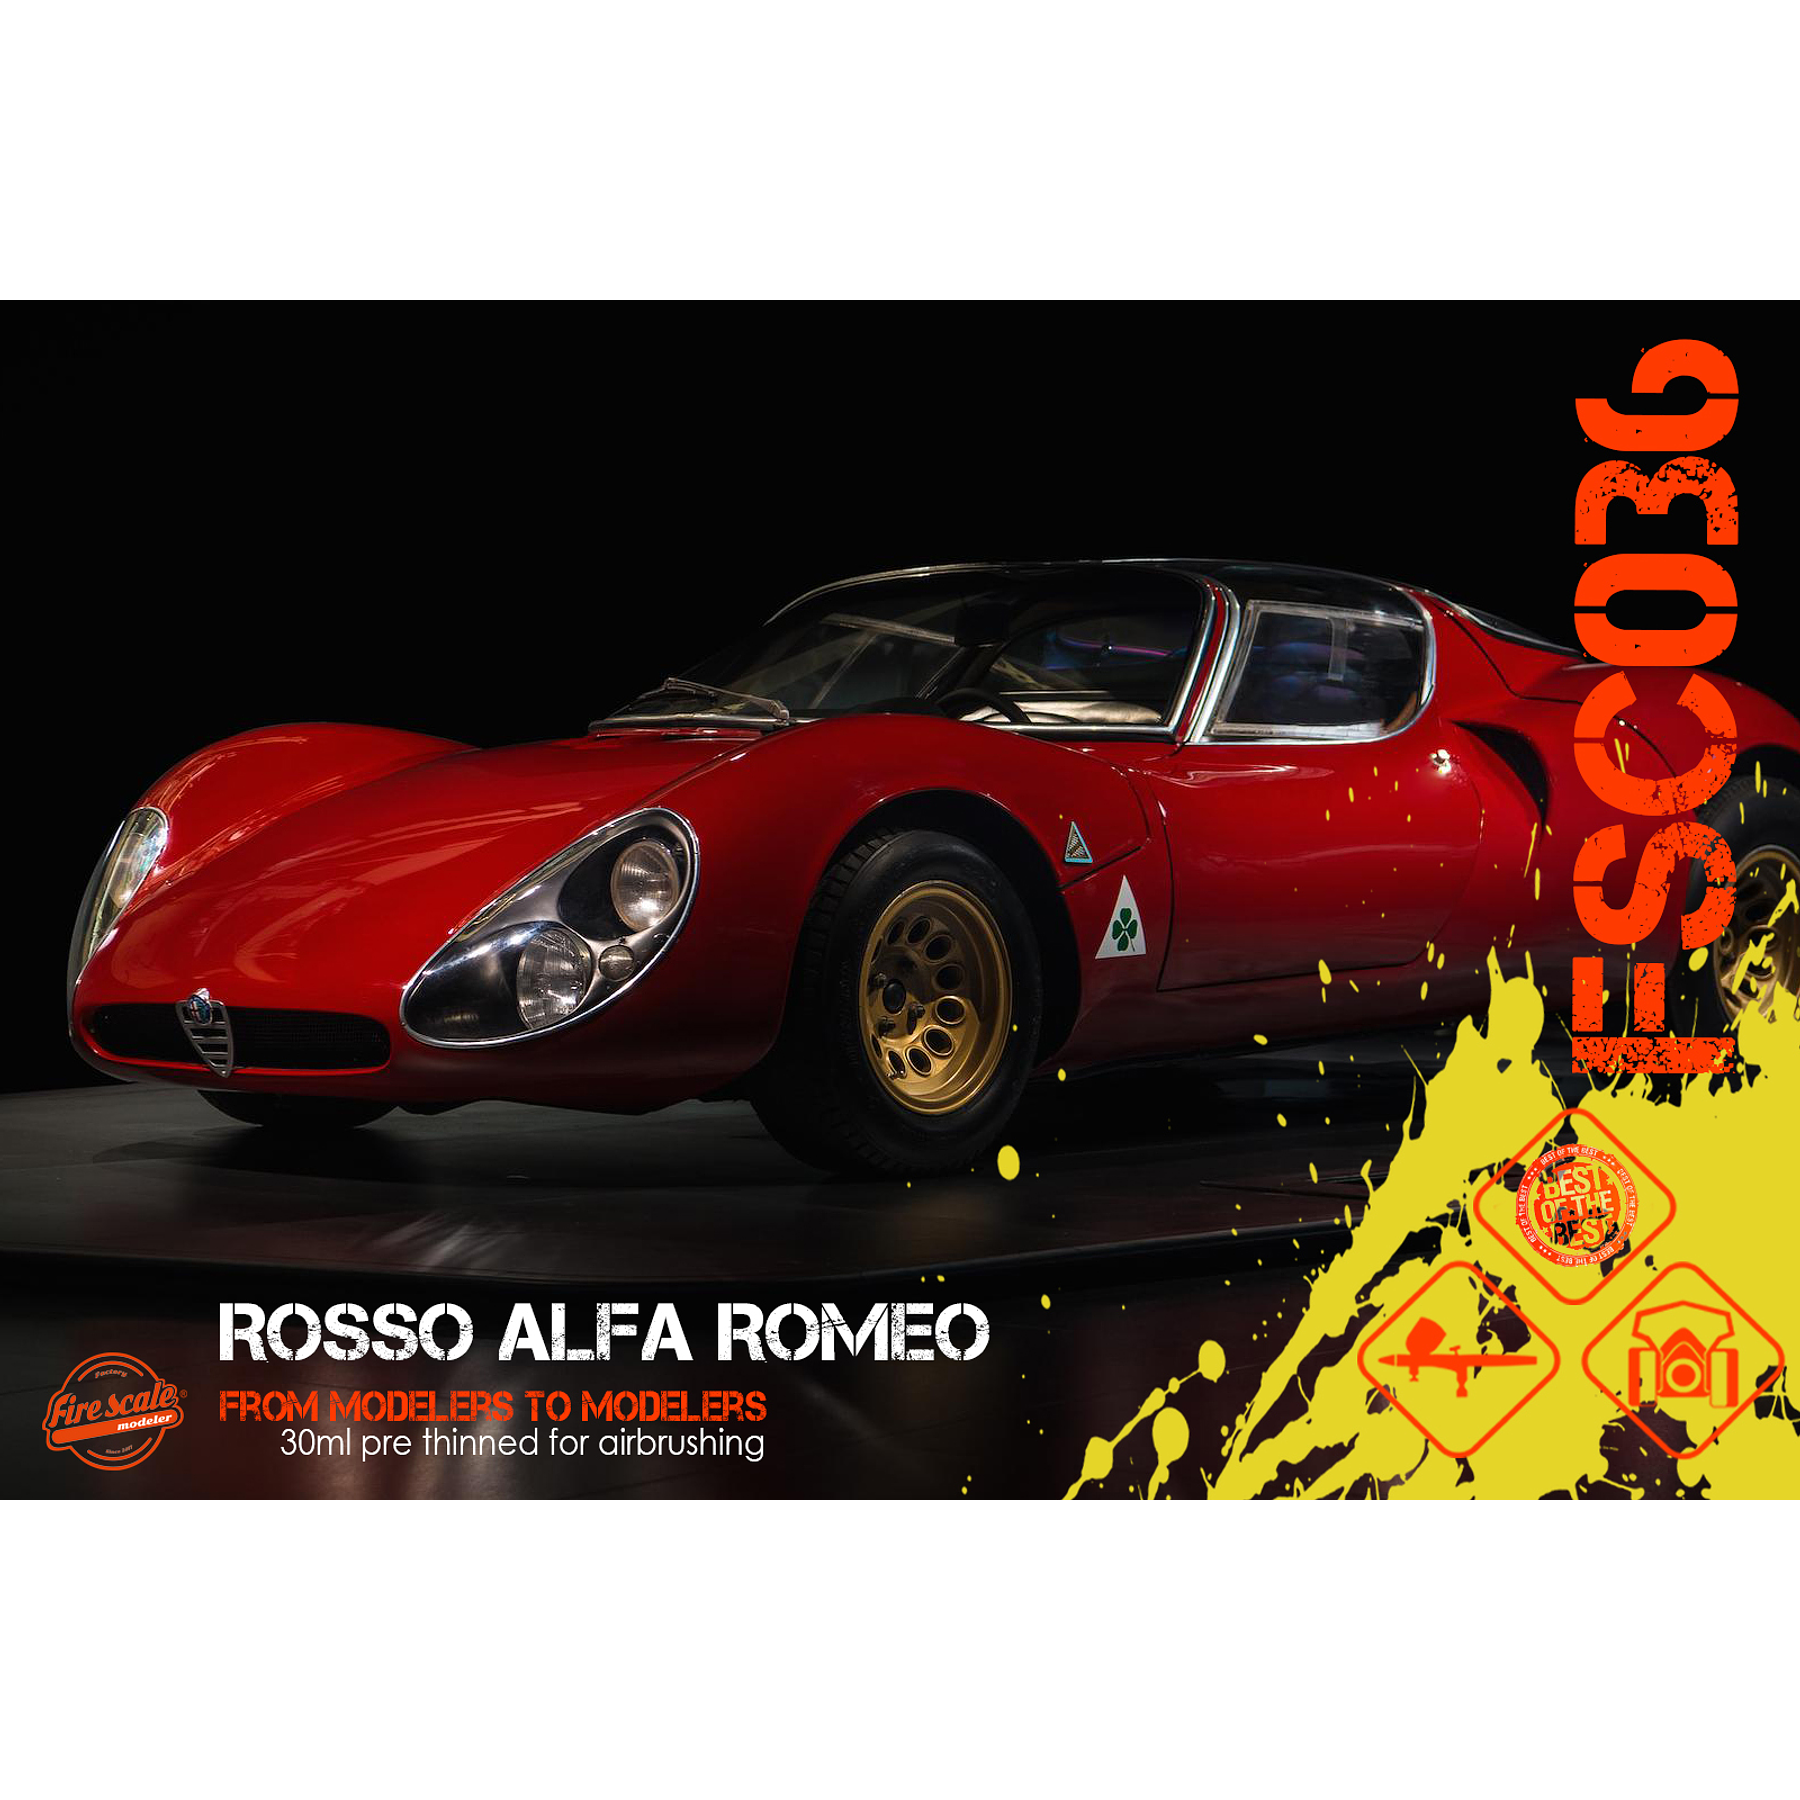 Rosso Alfa Romeo